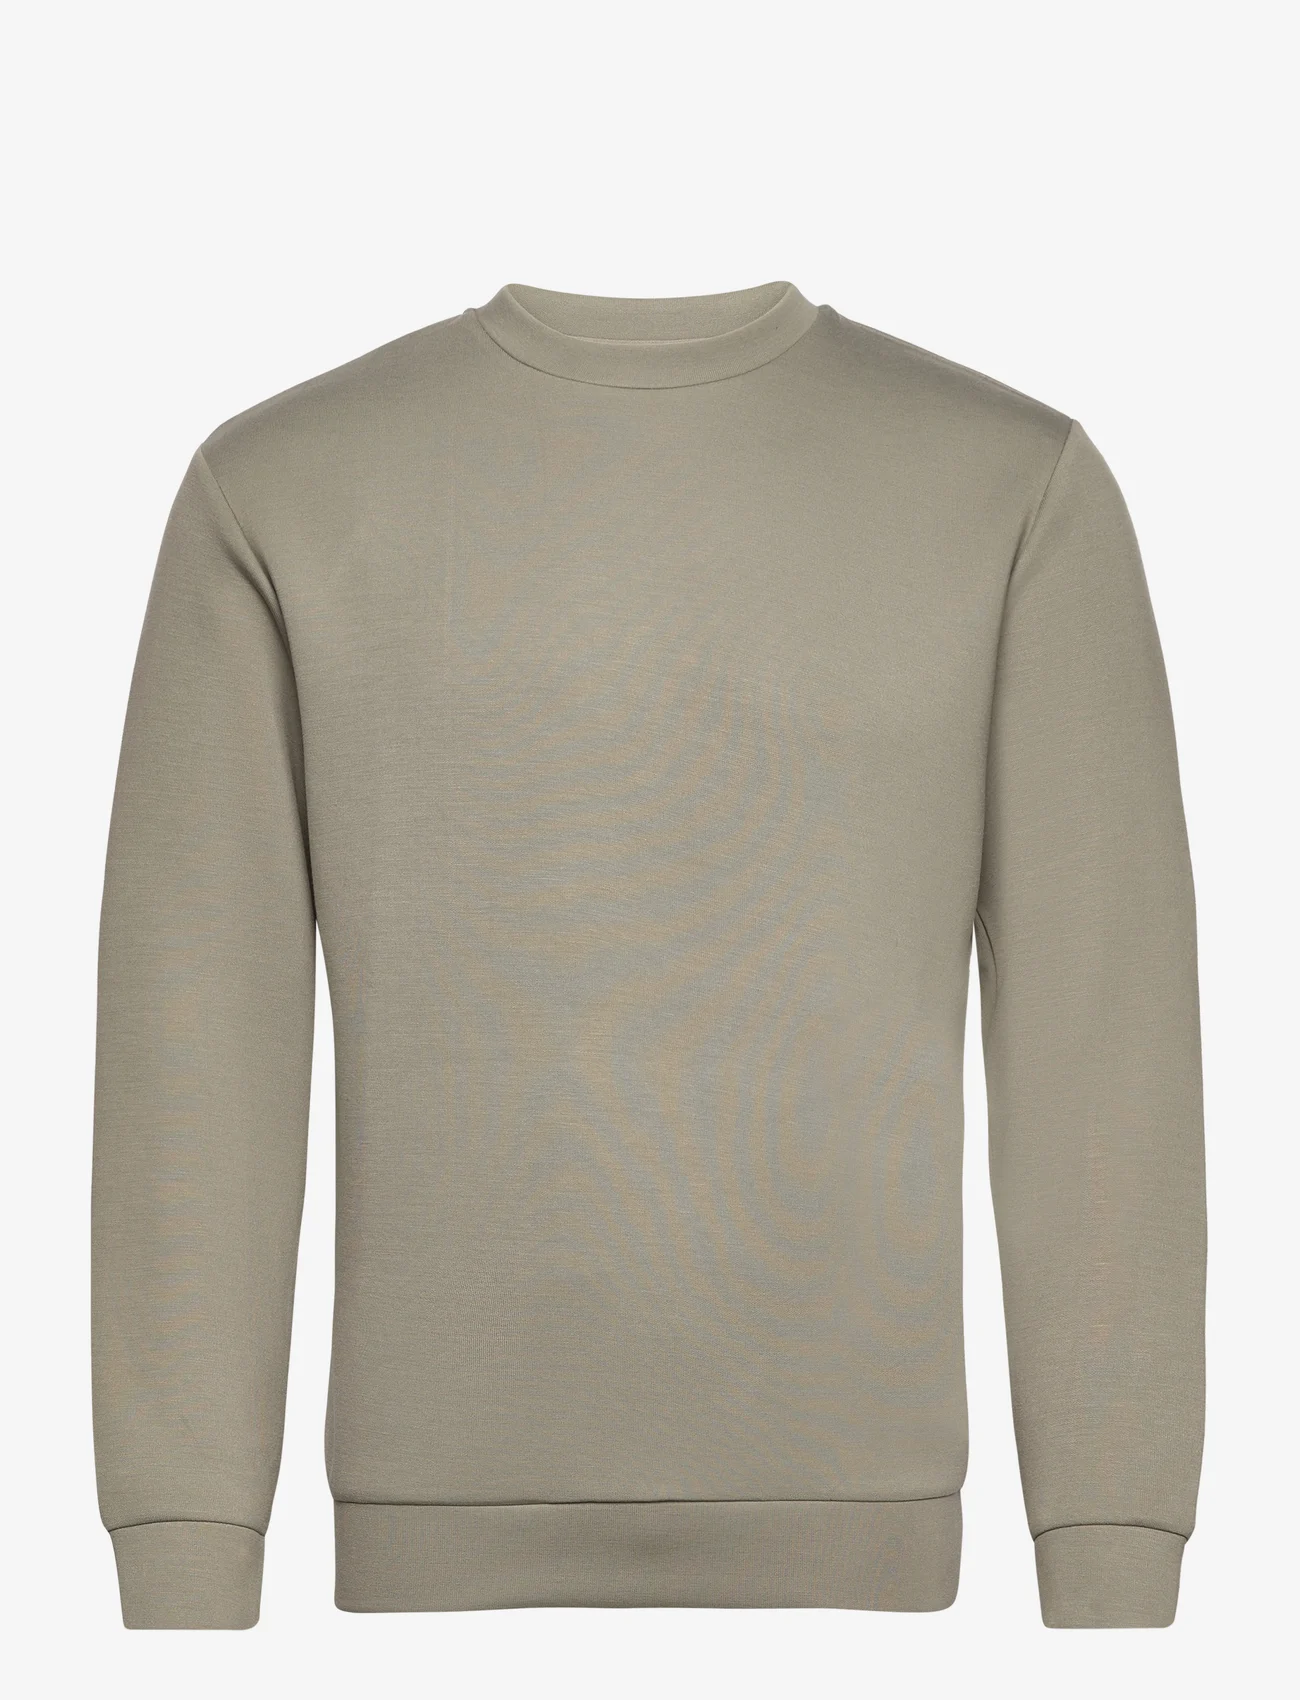 Selected Homme - SLHEMANUEL SOFT CREW NECK SWEAT NOOS - sweatshirts - vetiver - 0